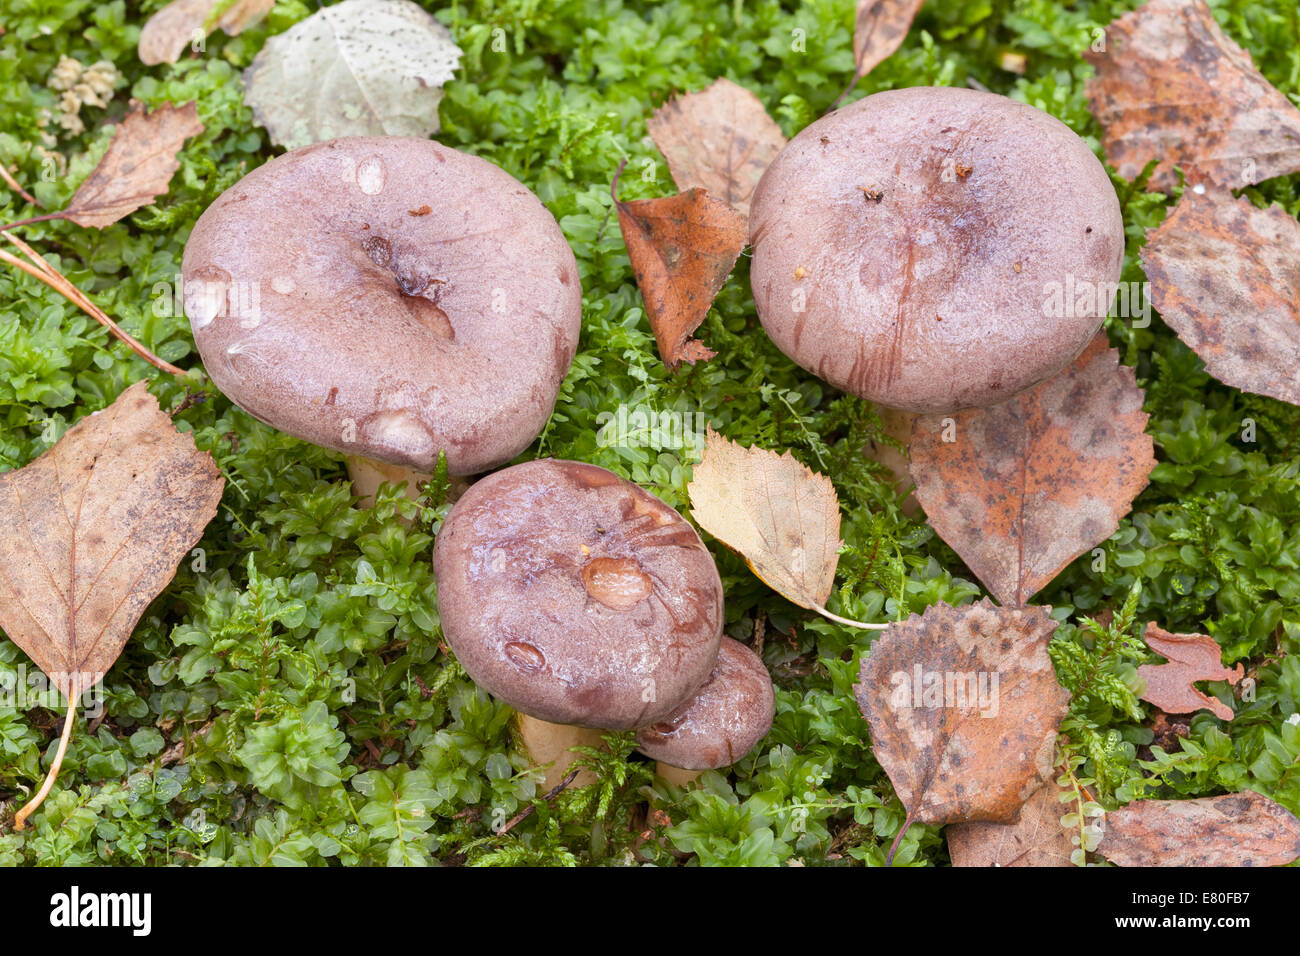 Lactarius trivialis mushrooms Stock Photo